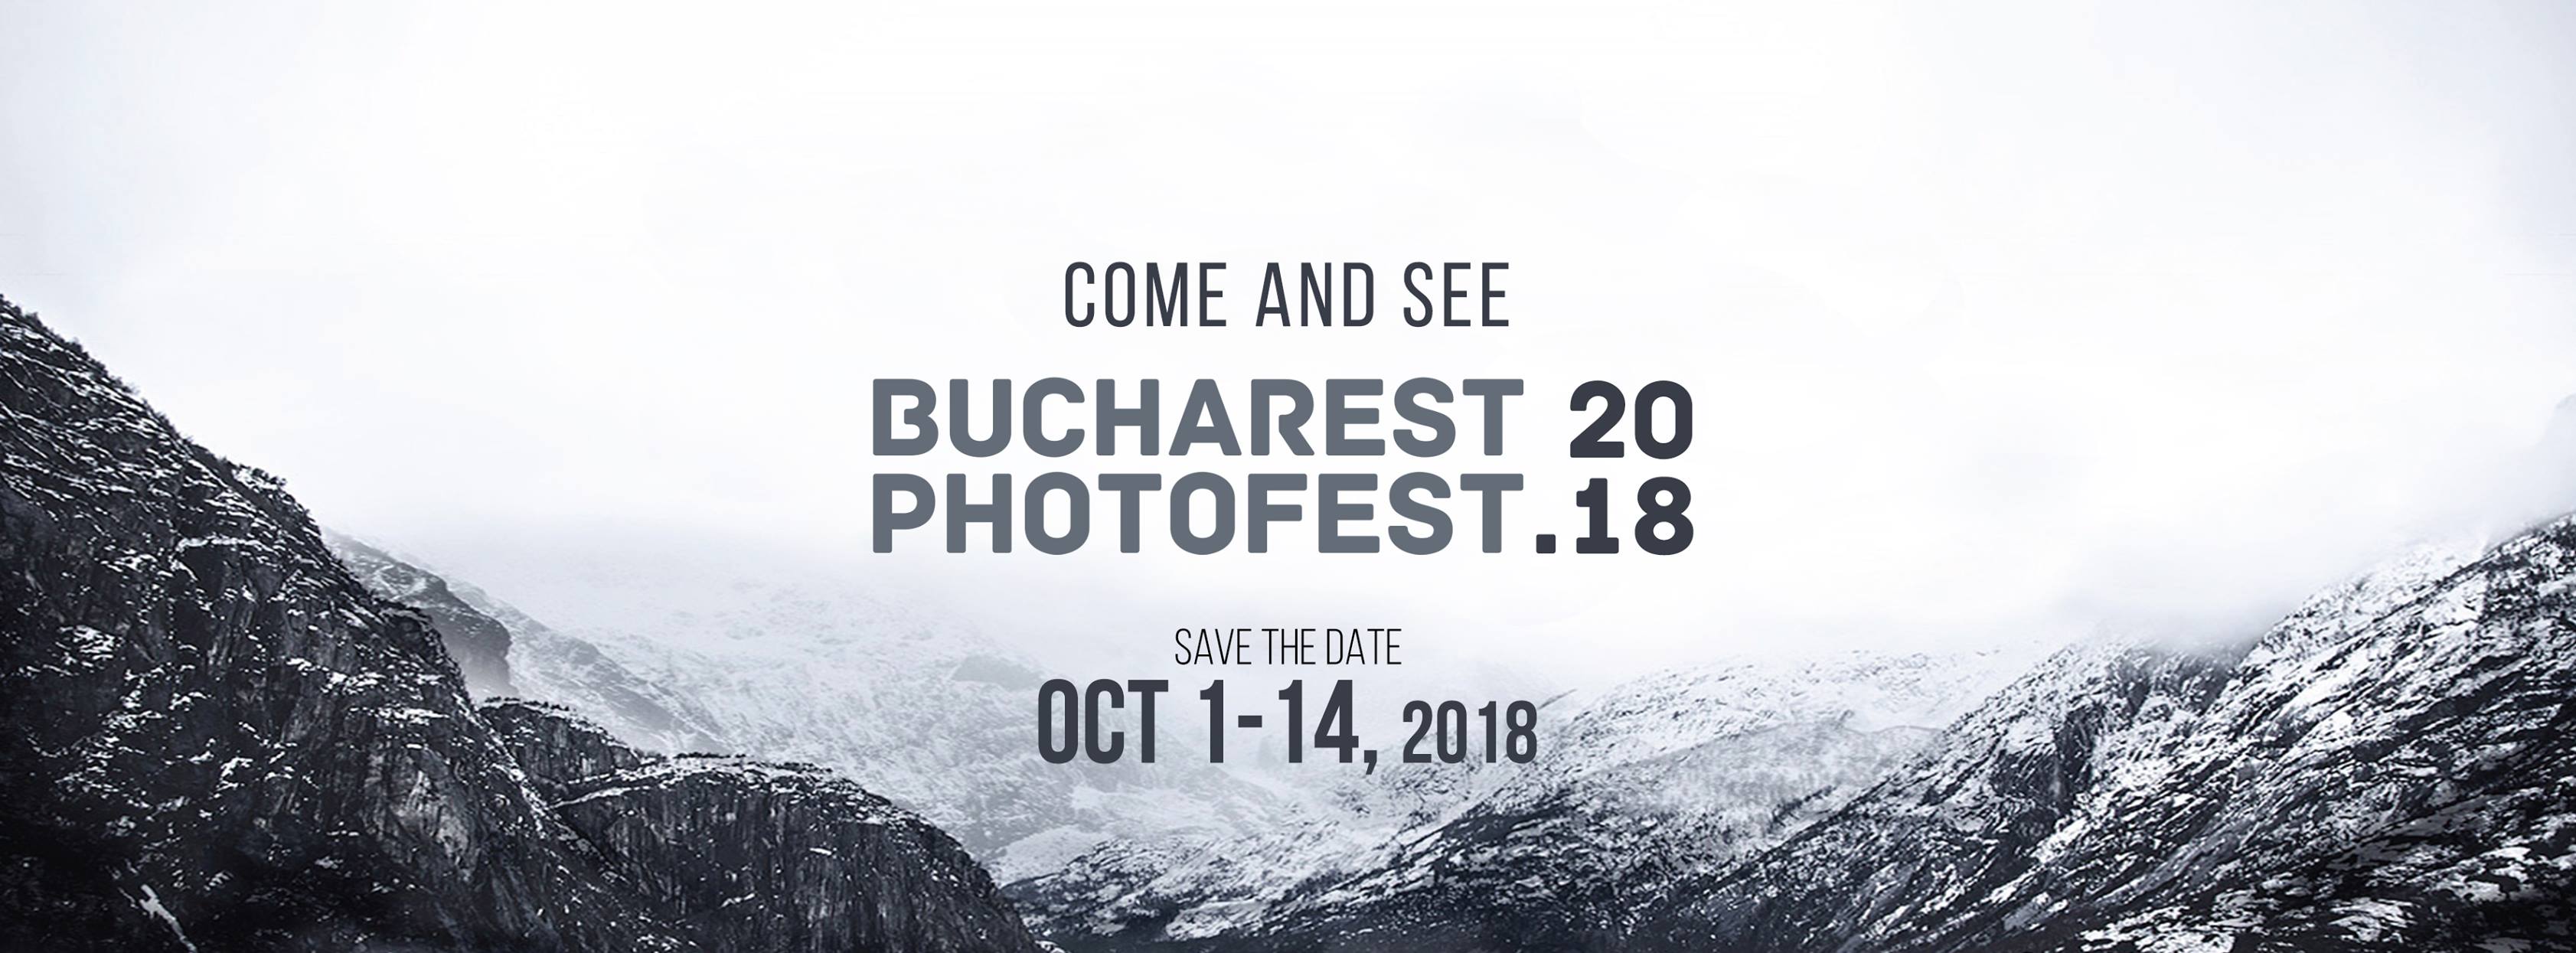 Bucharest photo fest